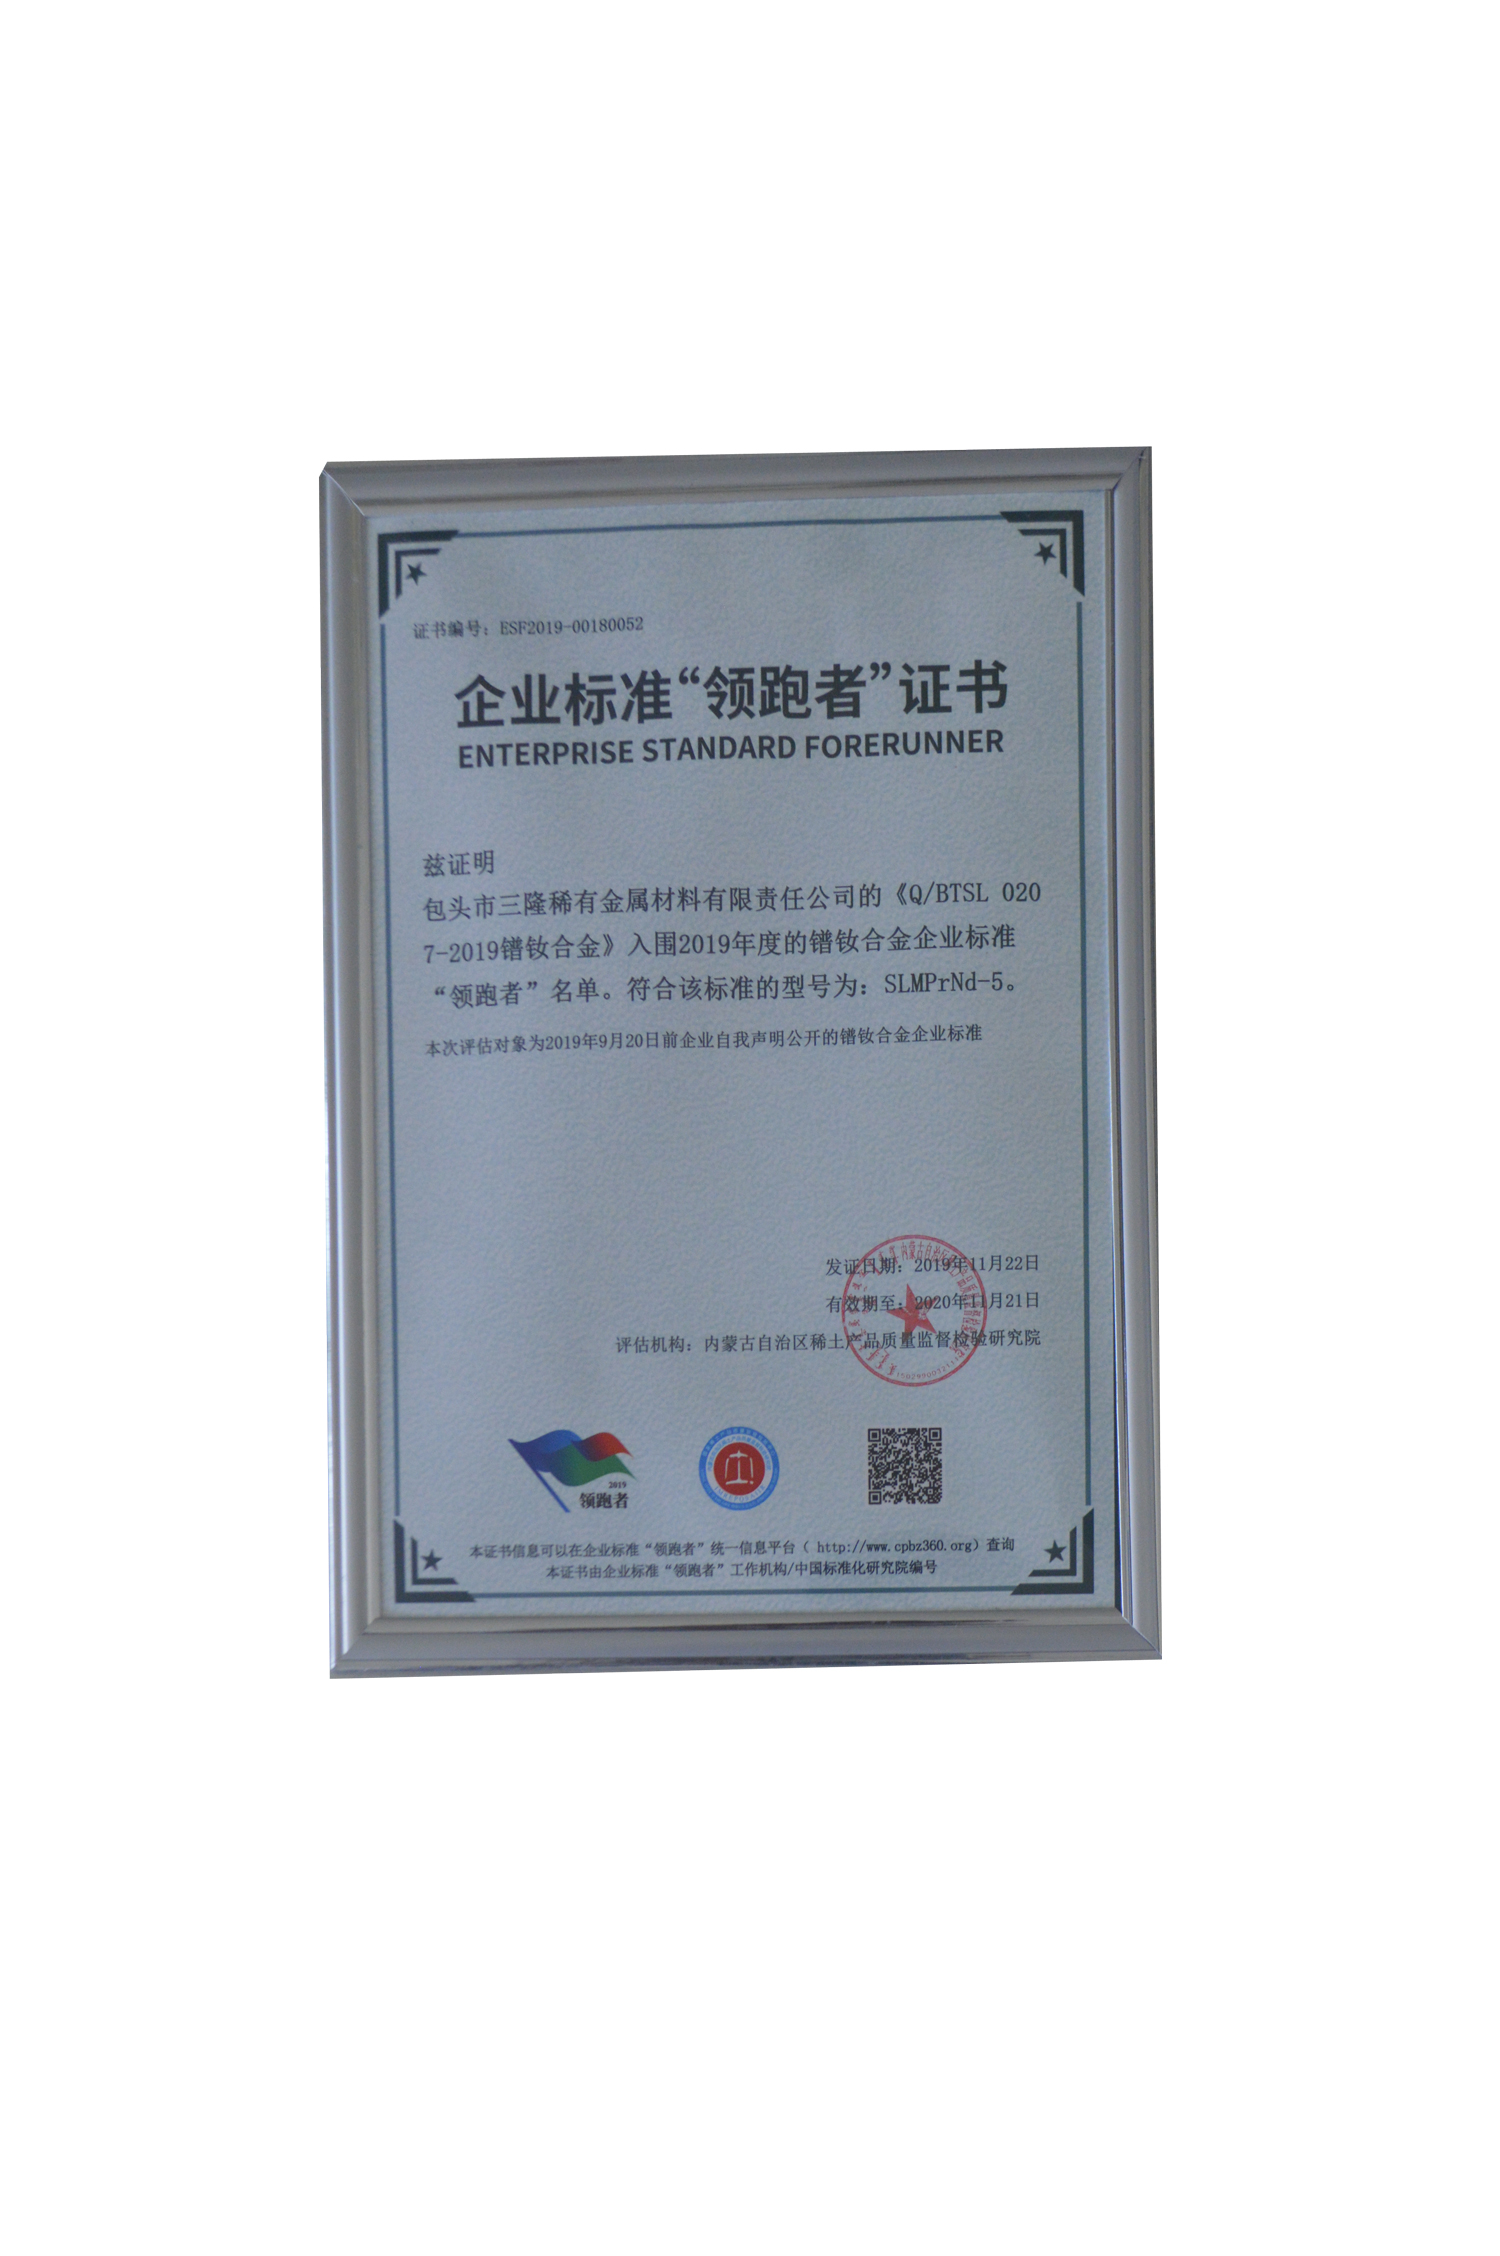 Enterprise standard "leader" certificate